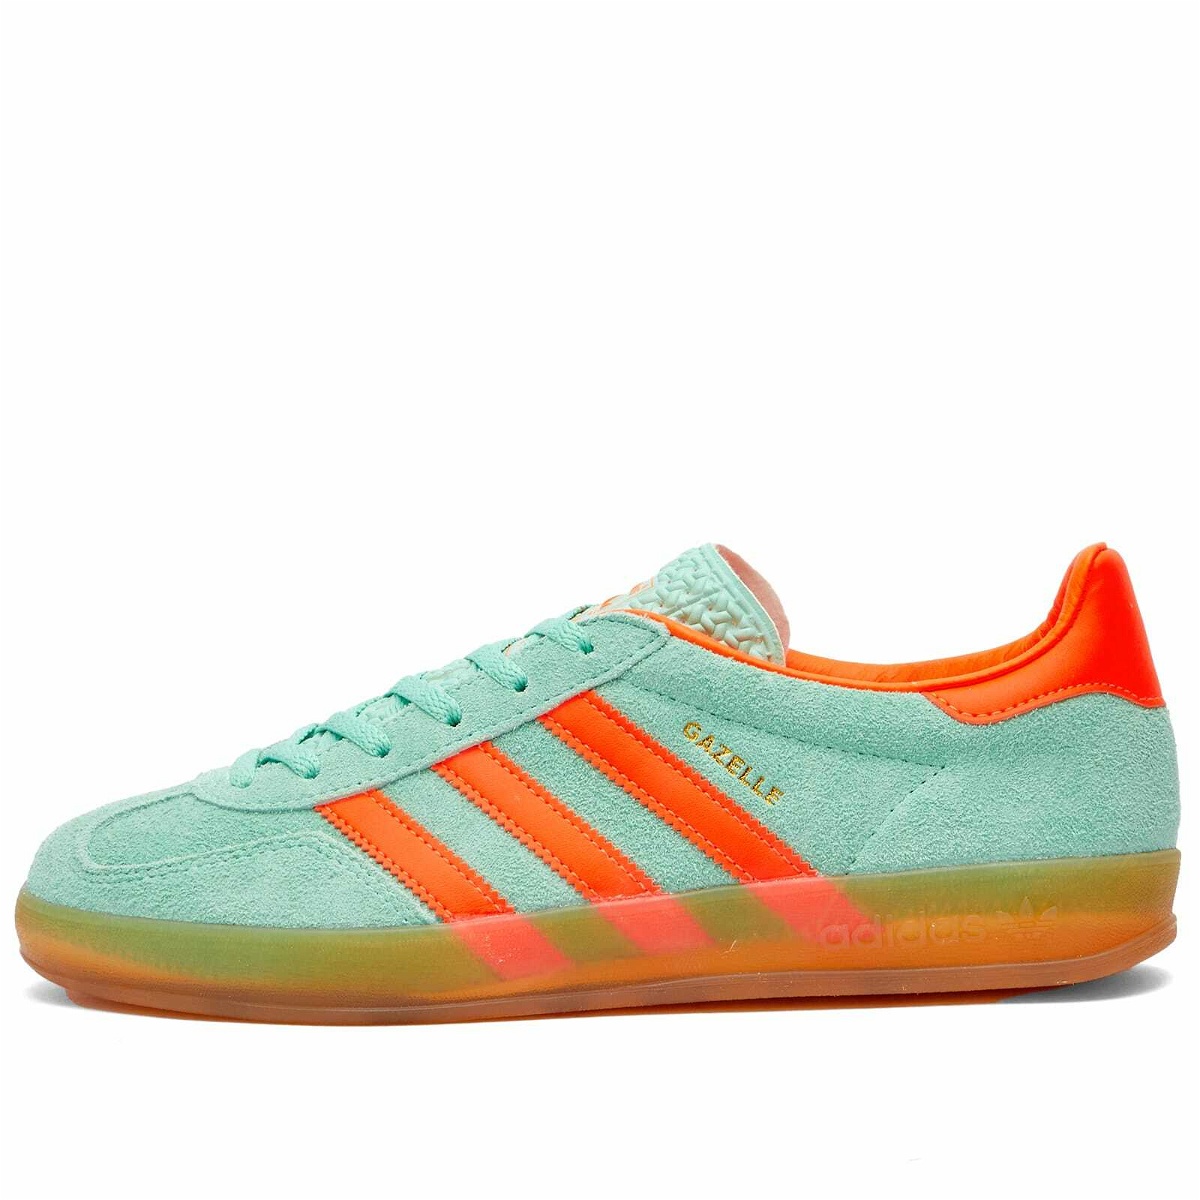 Adidas Gazelle Indoor W Sneakers in Pulse Mint/Orange adidas | Sneaker low